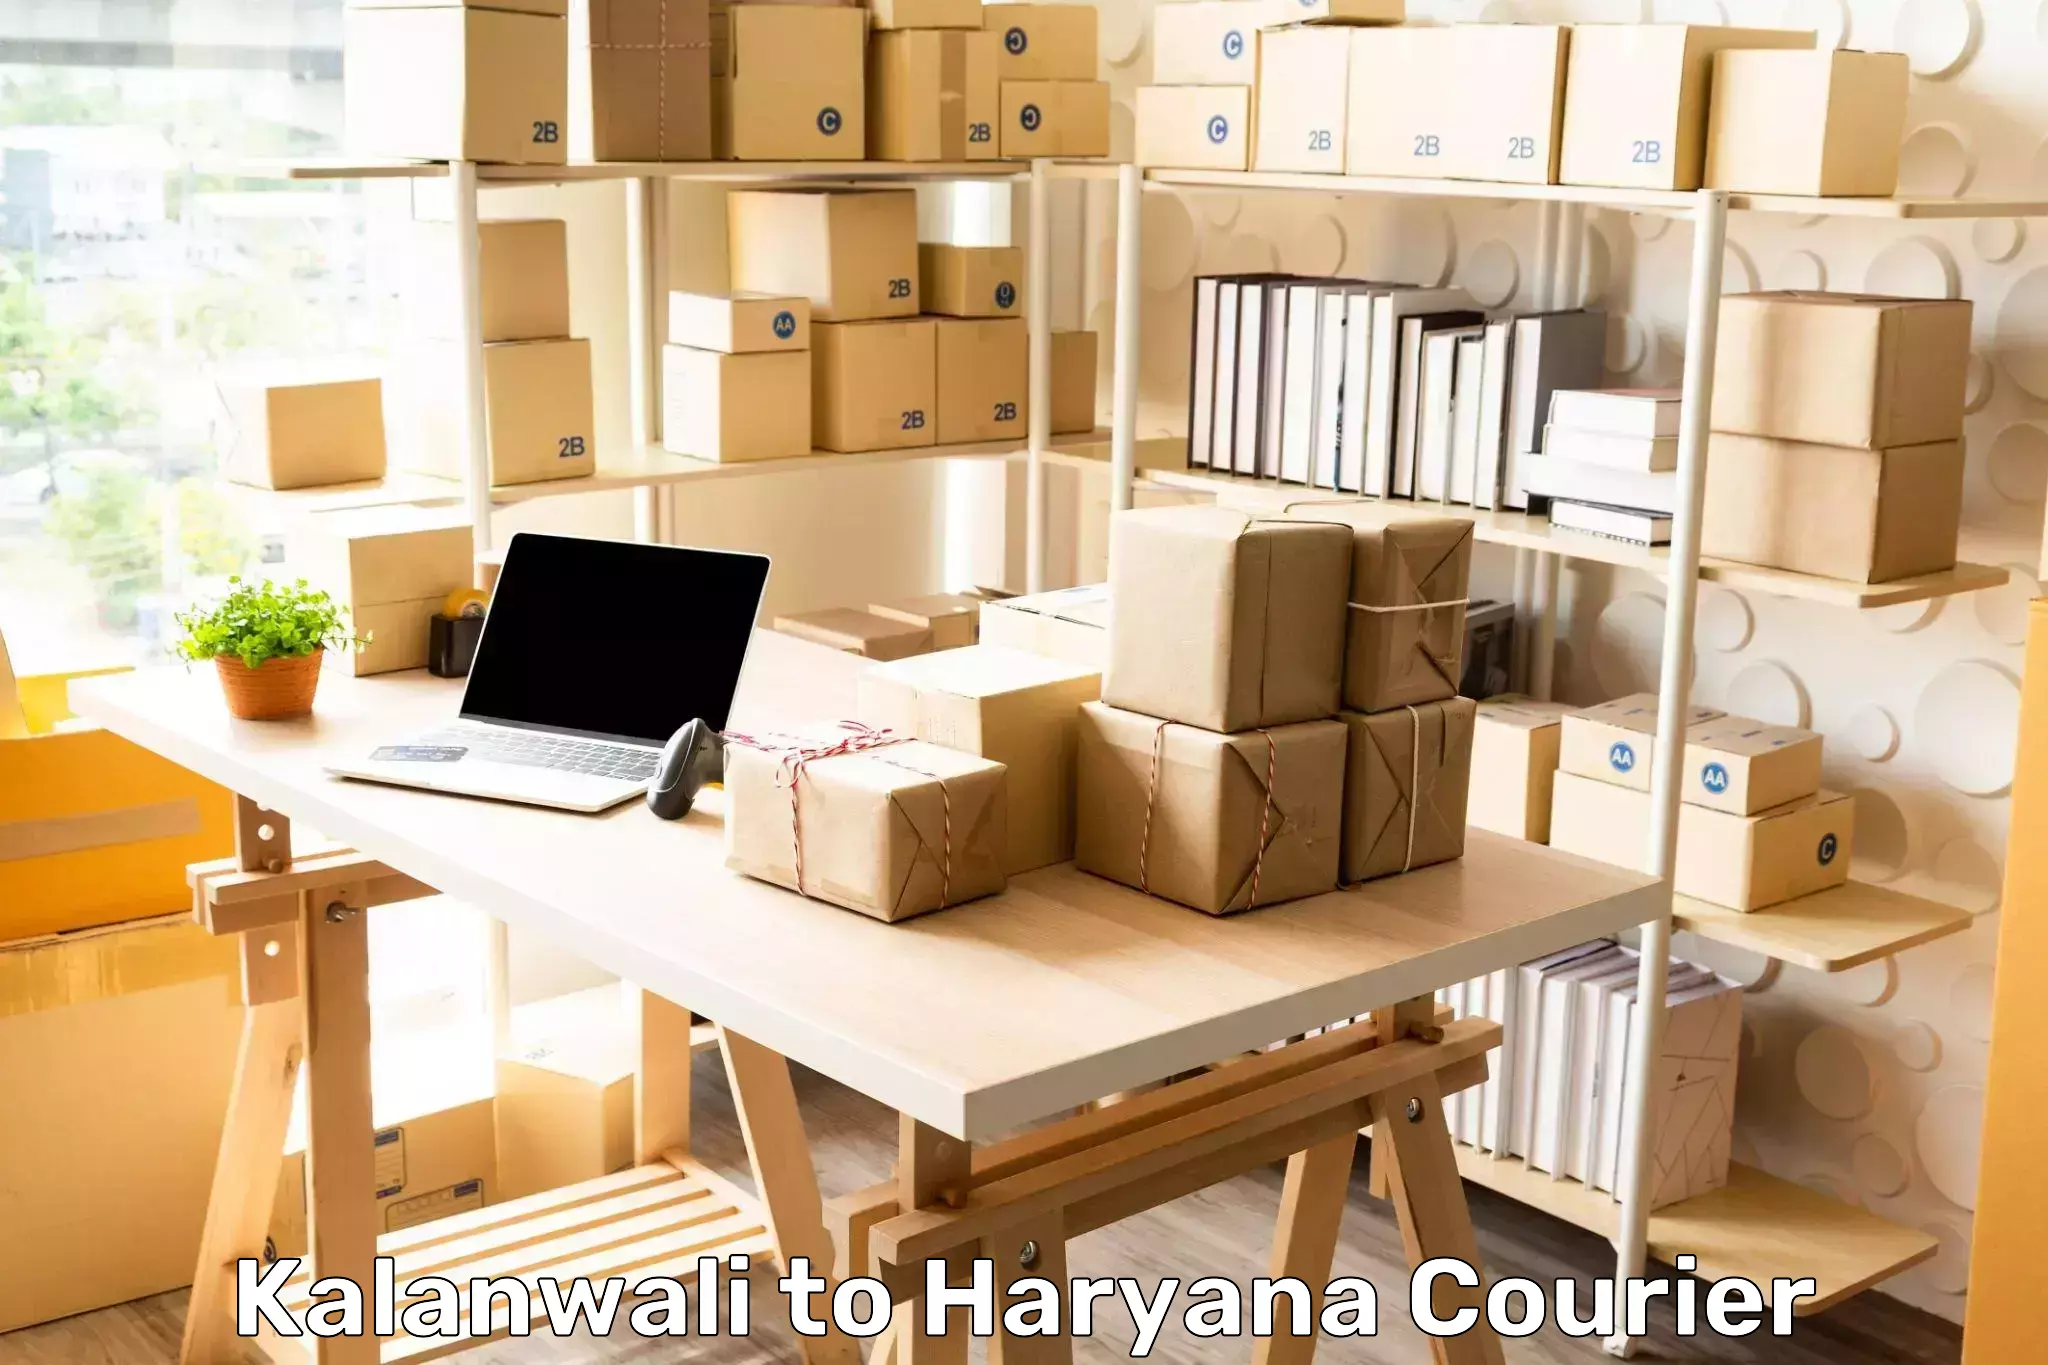 On-call courier service Kalanwali to Haryana